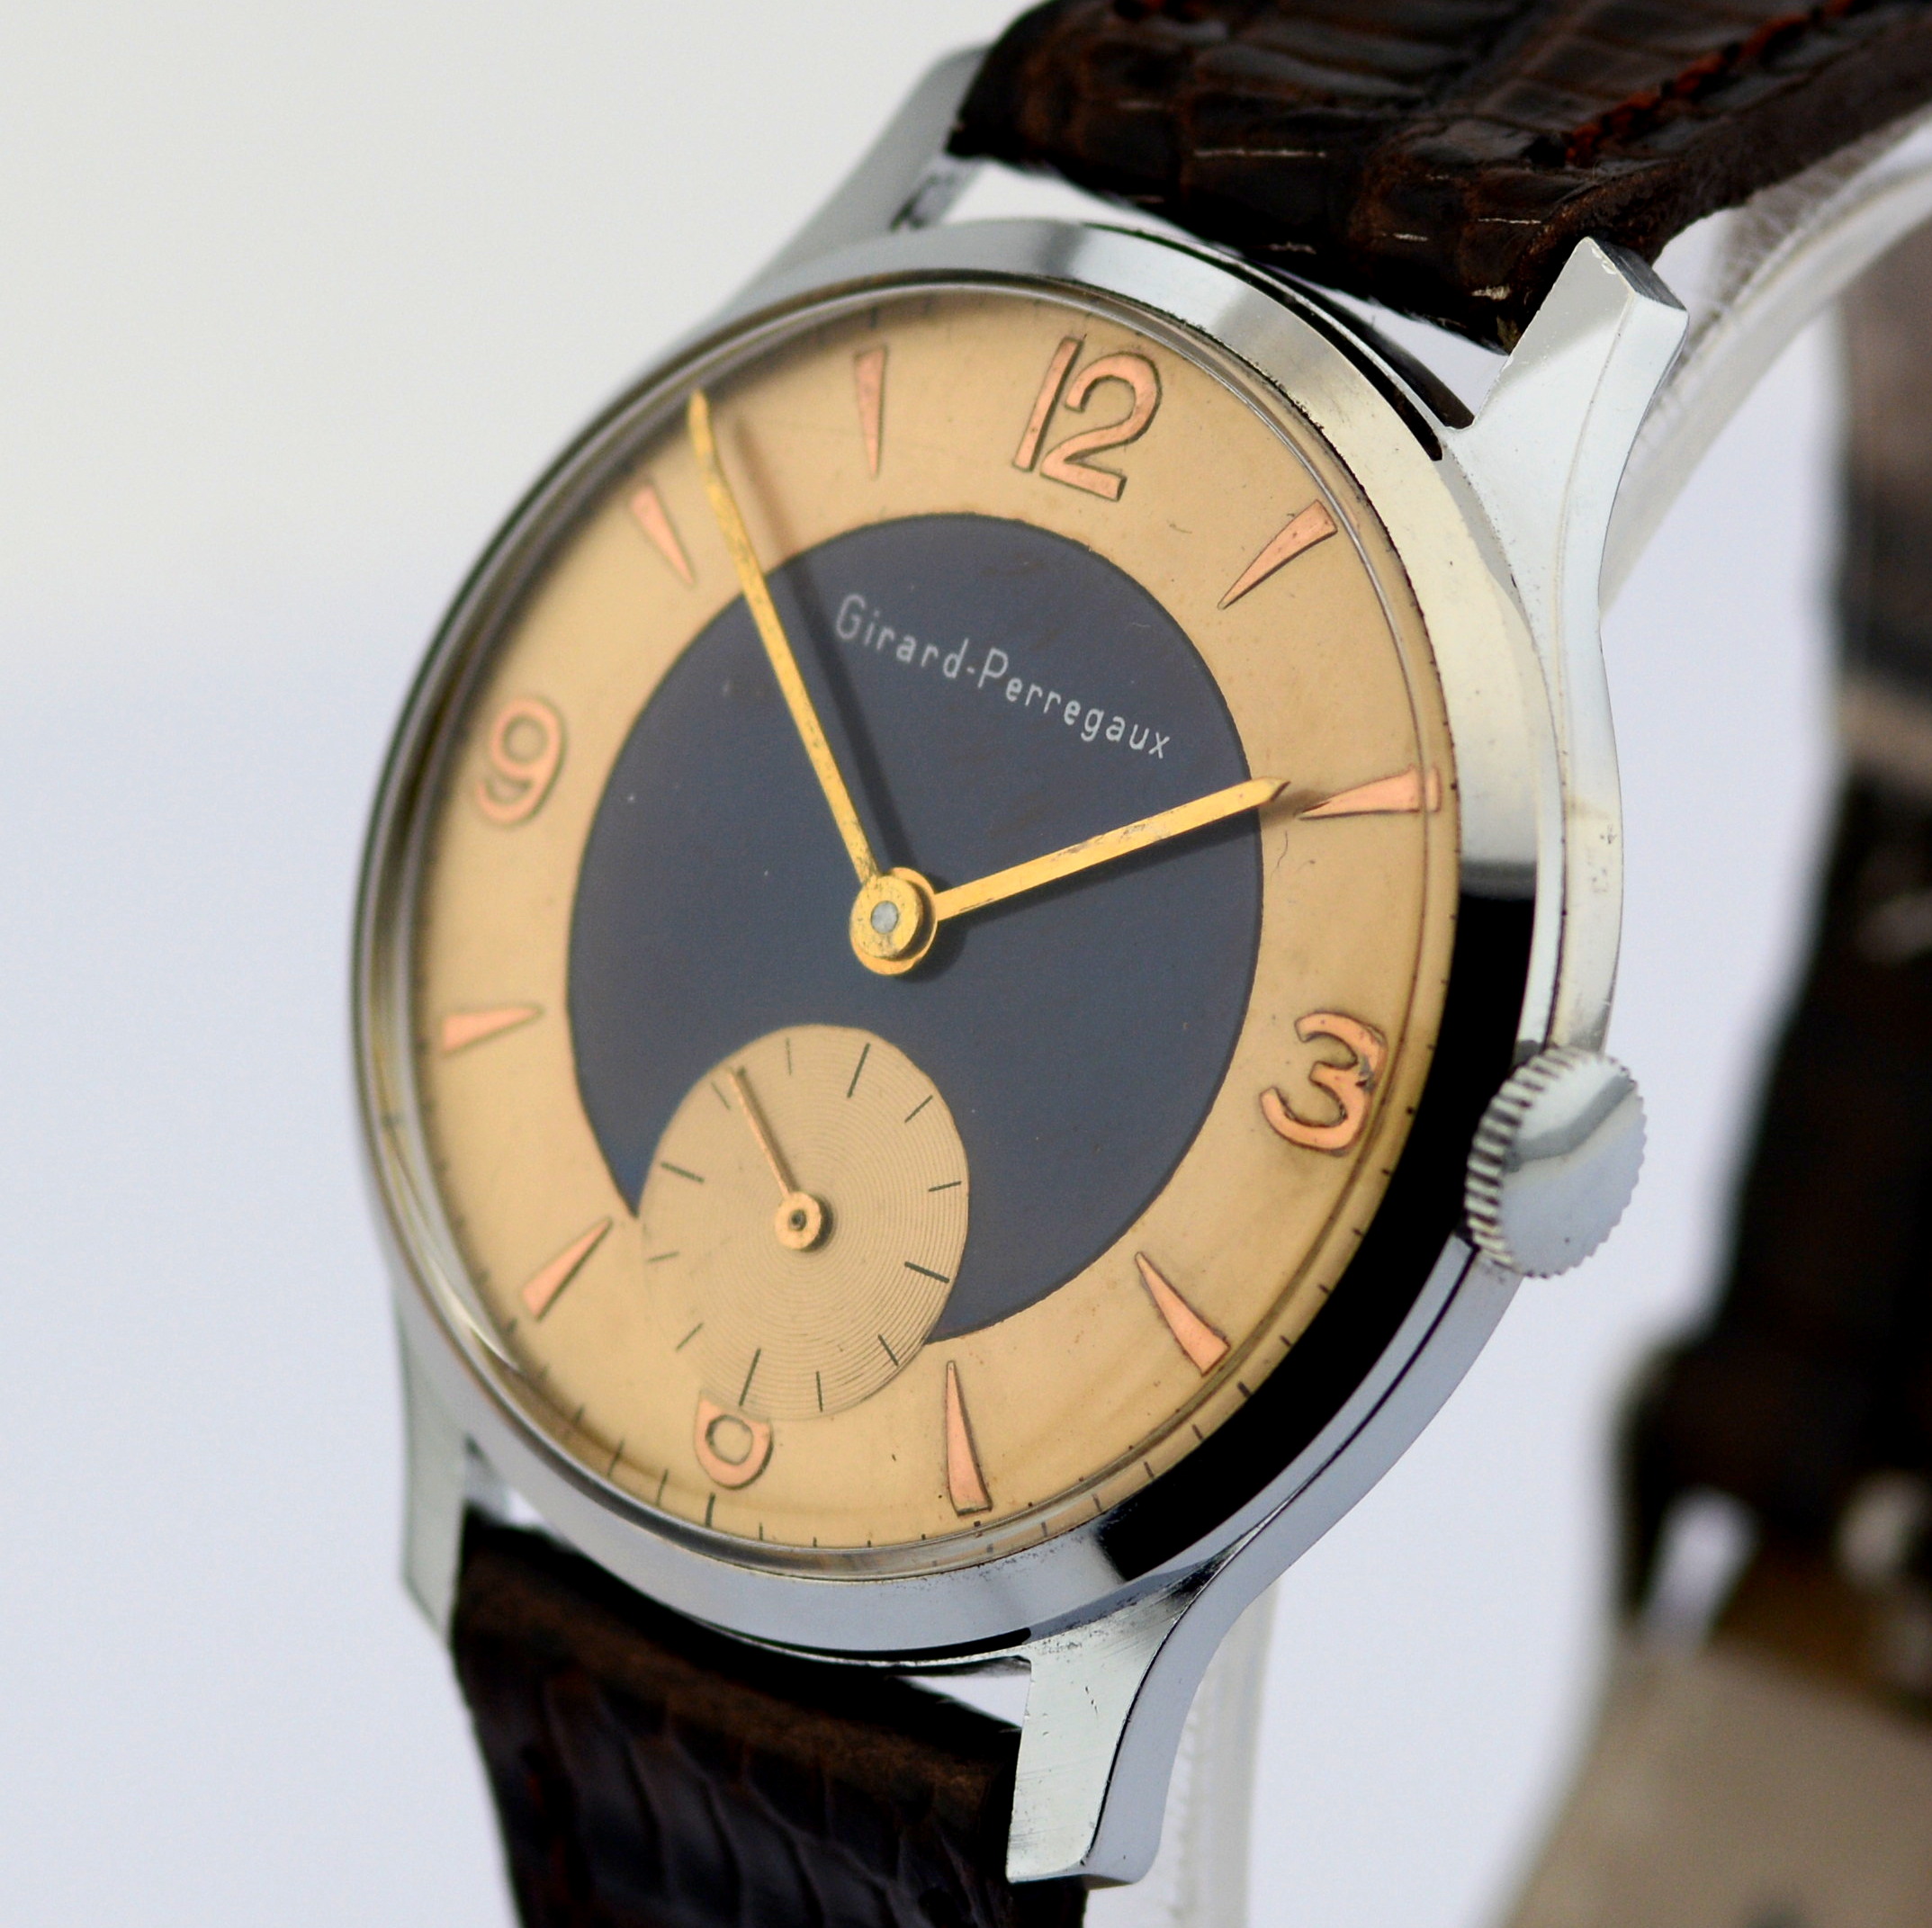 Girard-Perregaux / Vintage - Gentlmen's Steel Wrist Watch - Image 5 of 9